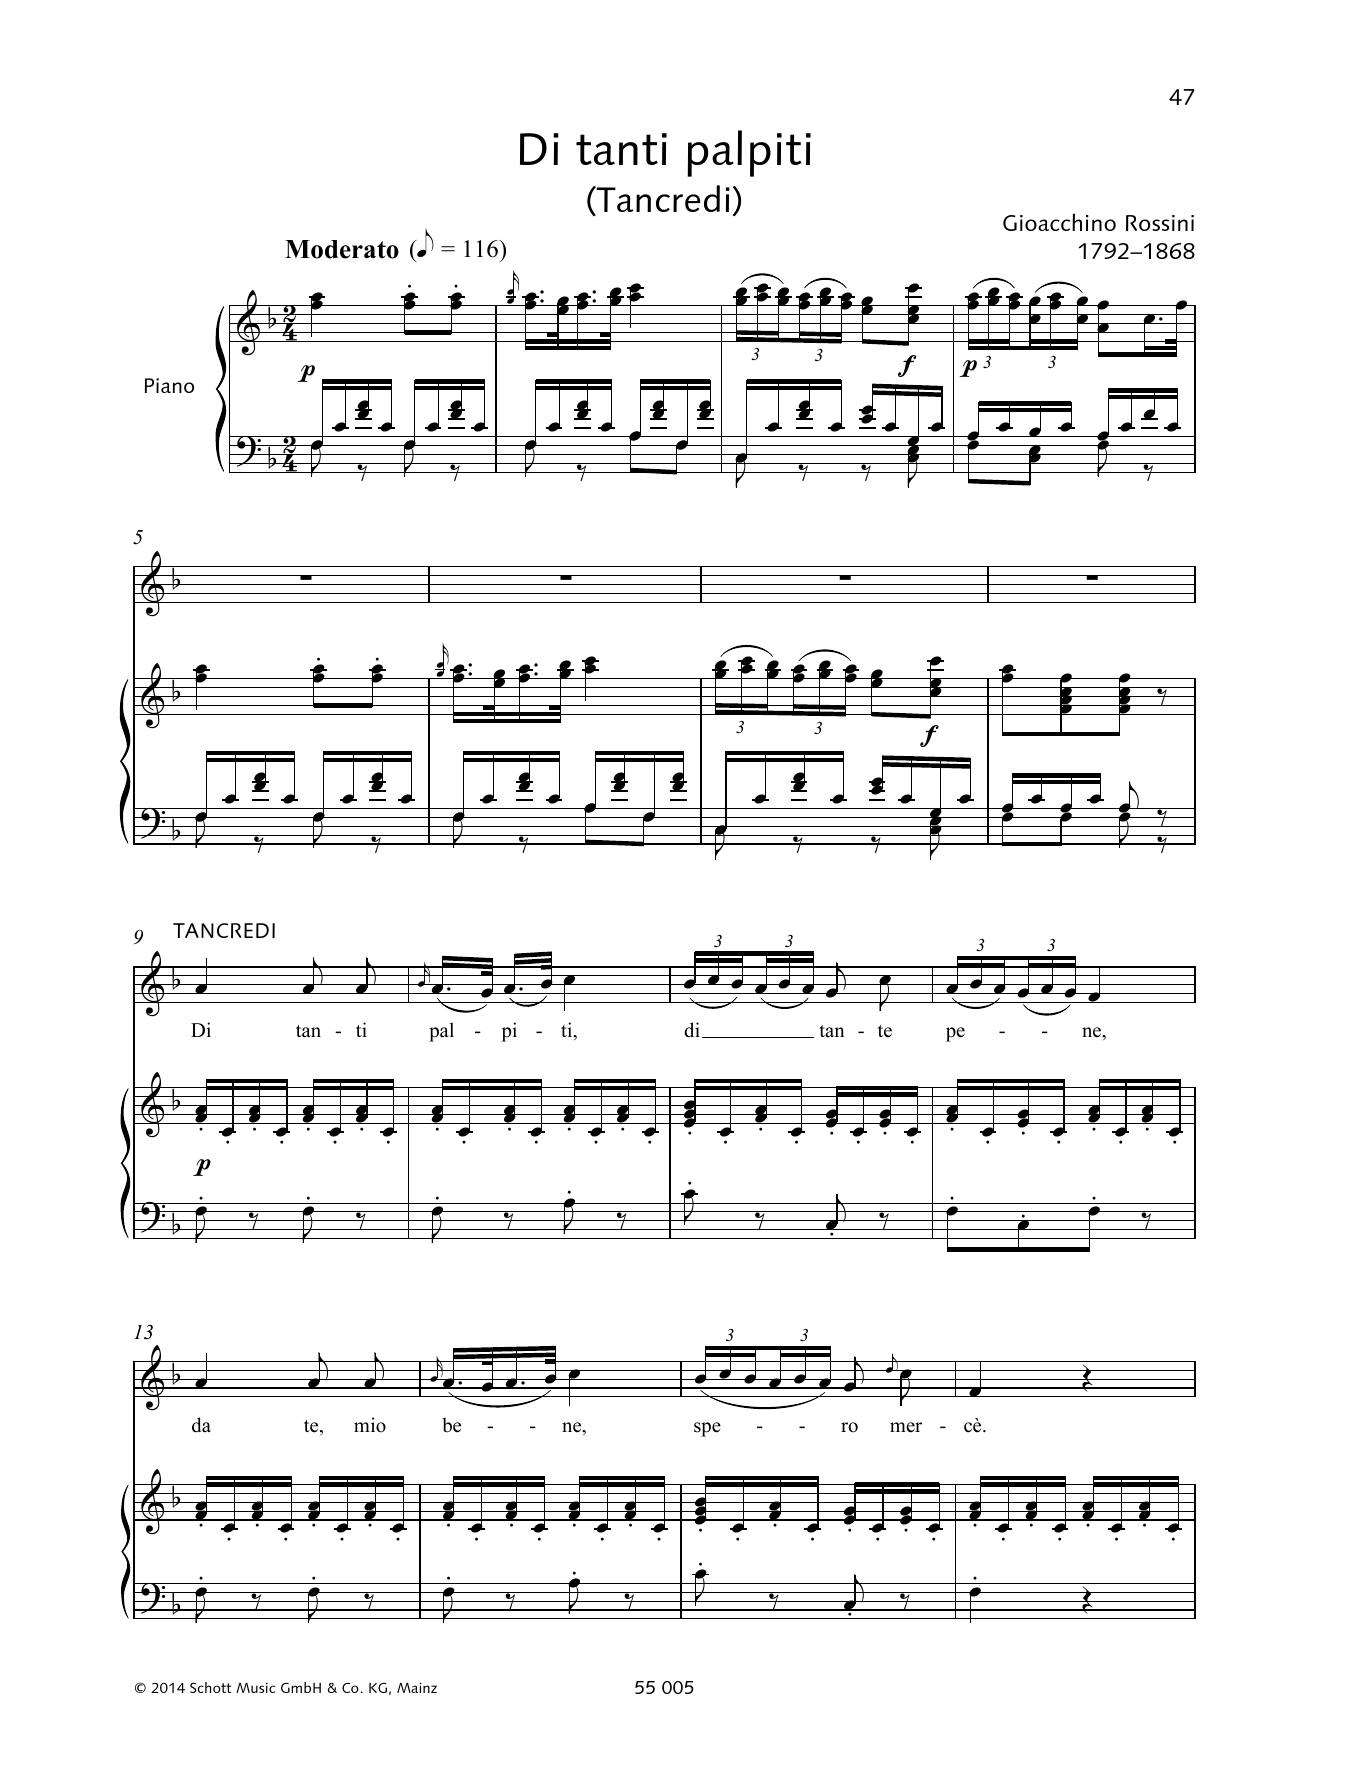 Download Francesca Licciarda Di tanti palpiti Sheet Music and learn how to play Piano & Vocal PDF digital score in minutes